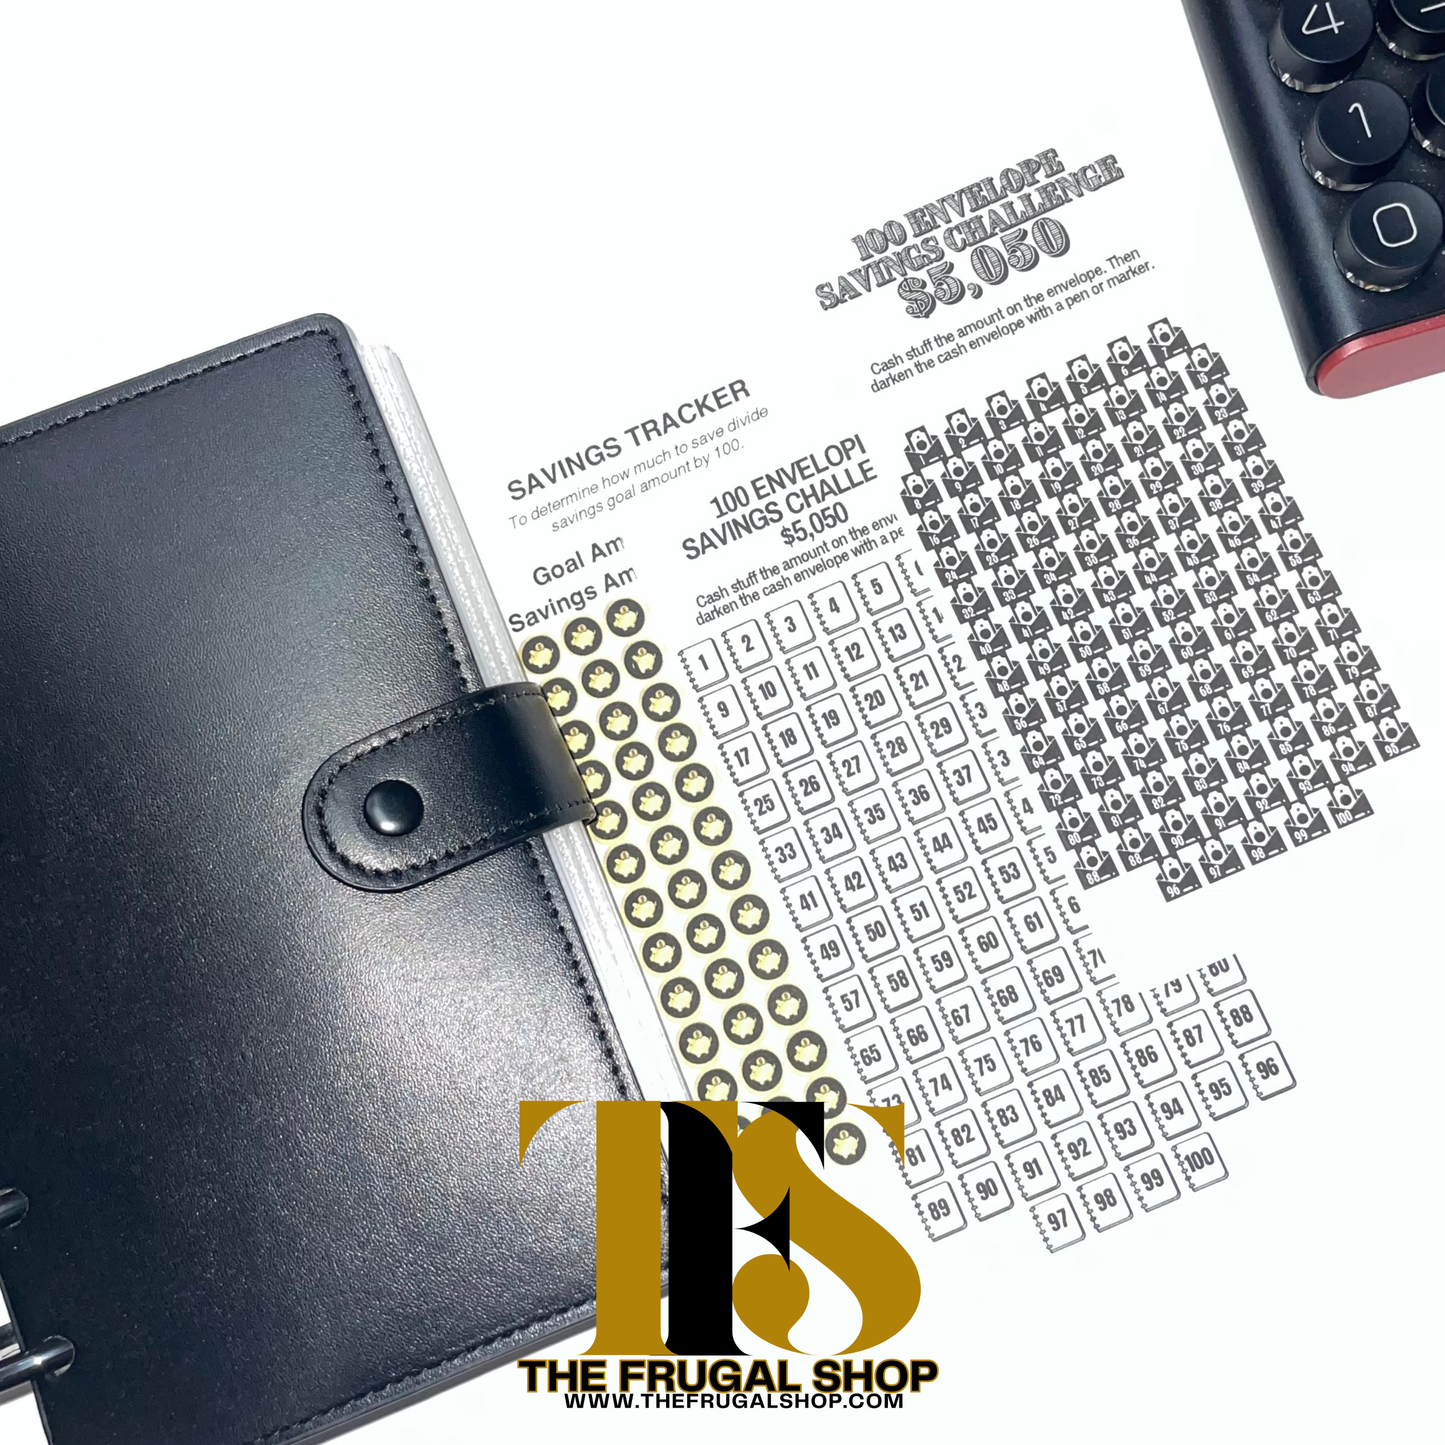 100 Cash Envelopes Smooth Black Leather Discbound Accessory Organizer System